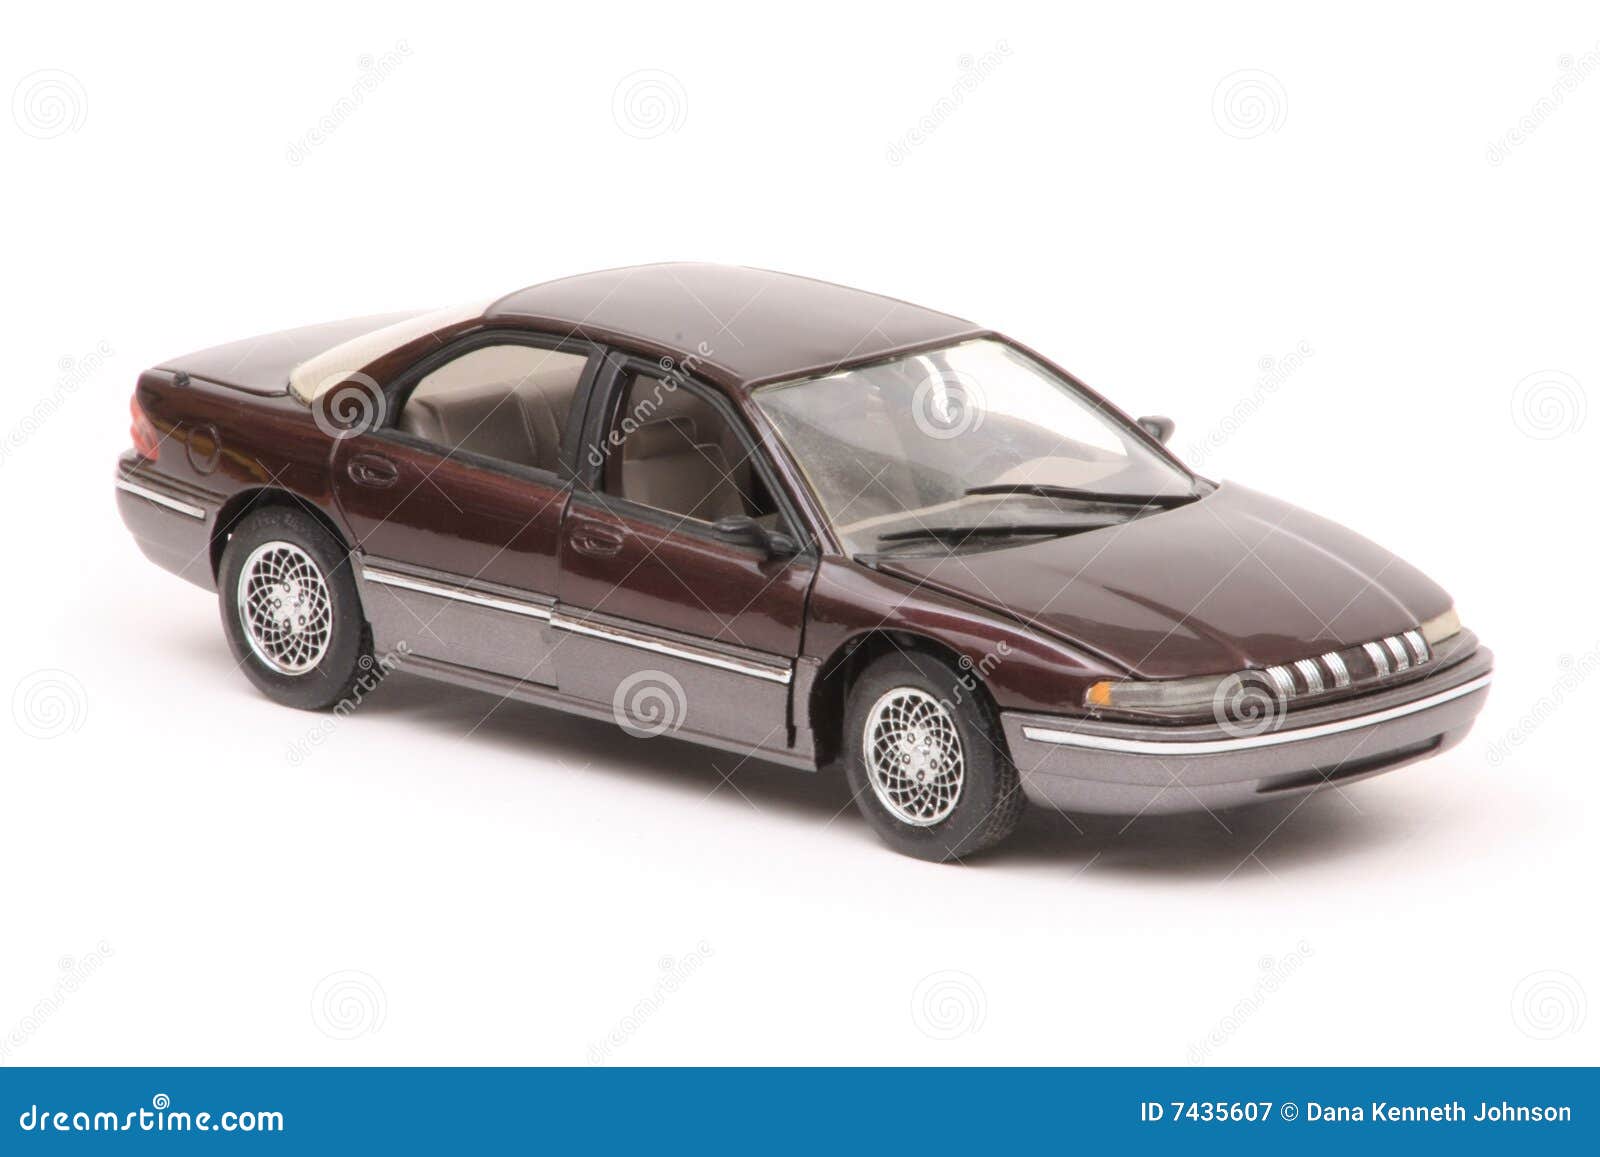 Chrysler Concorde Scale Model